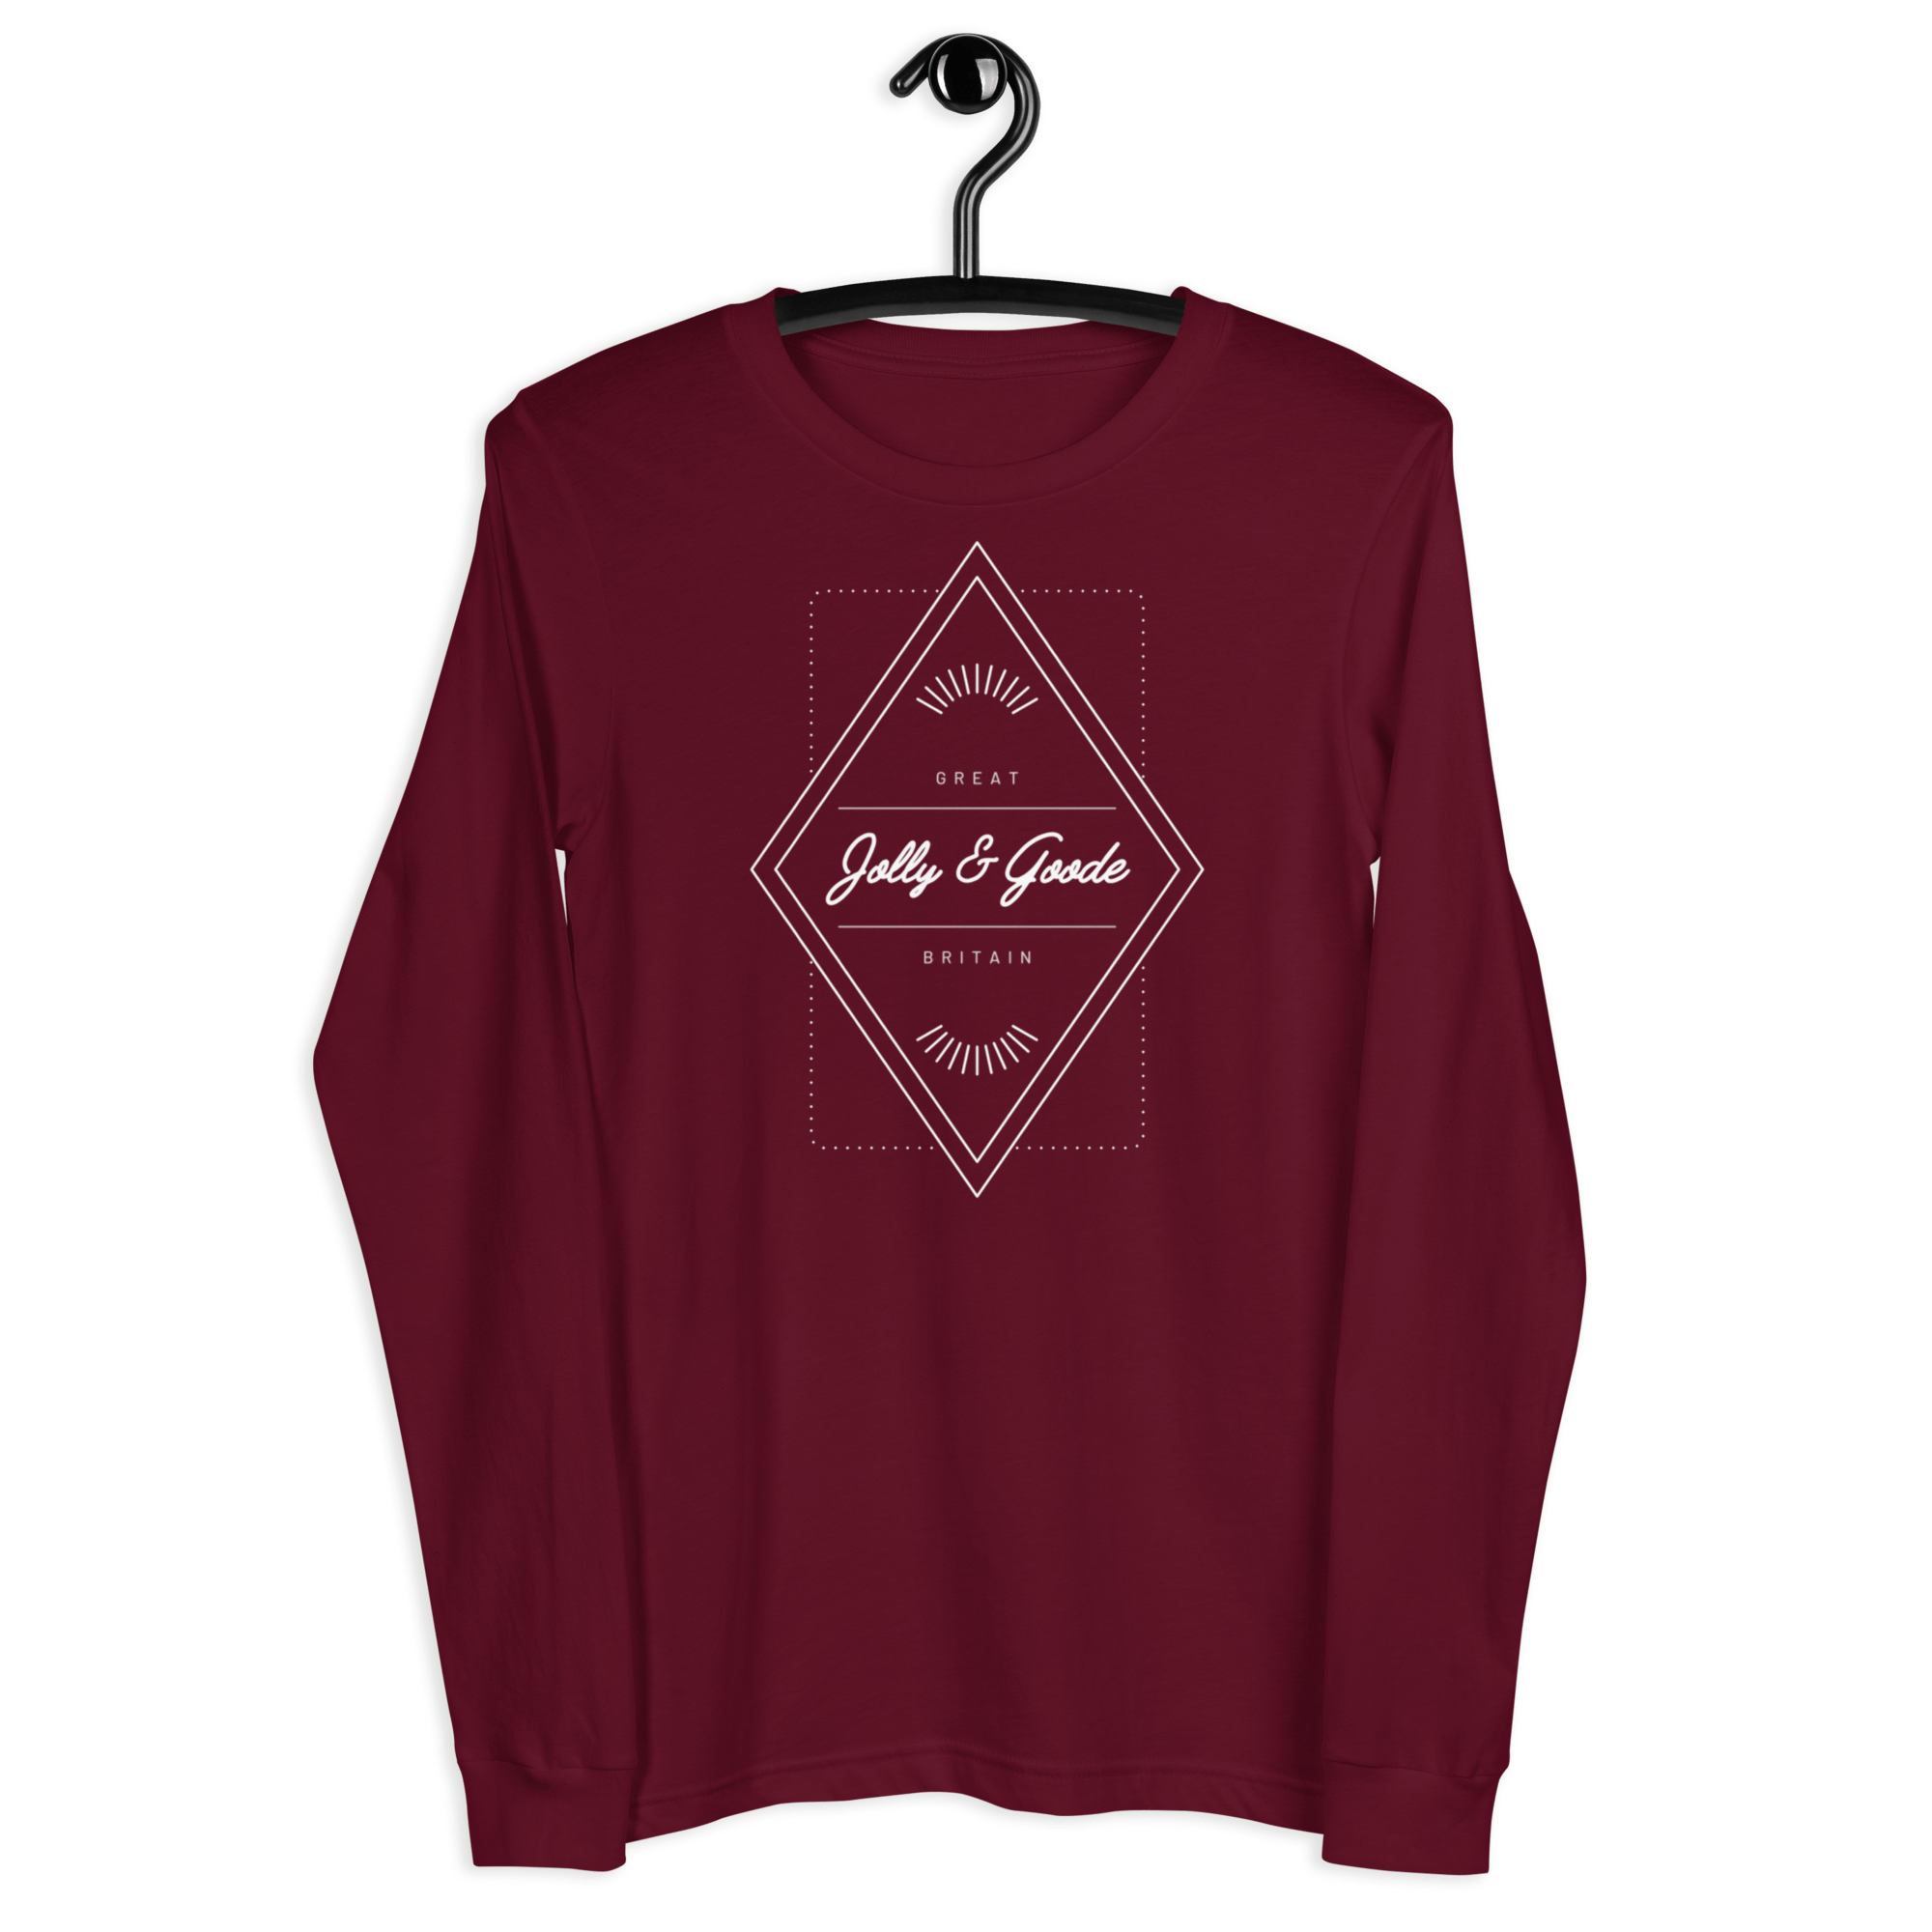 Jolly & Goode Diamond Long-Sleeve Shirt Maroon / XS Jolly & Goode